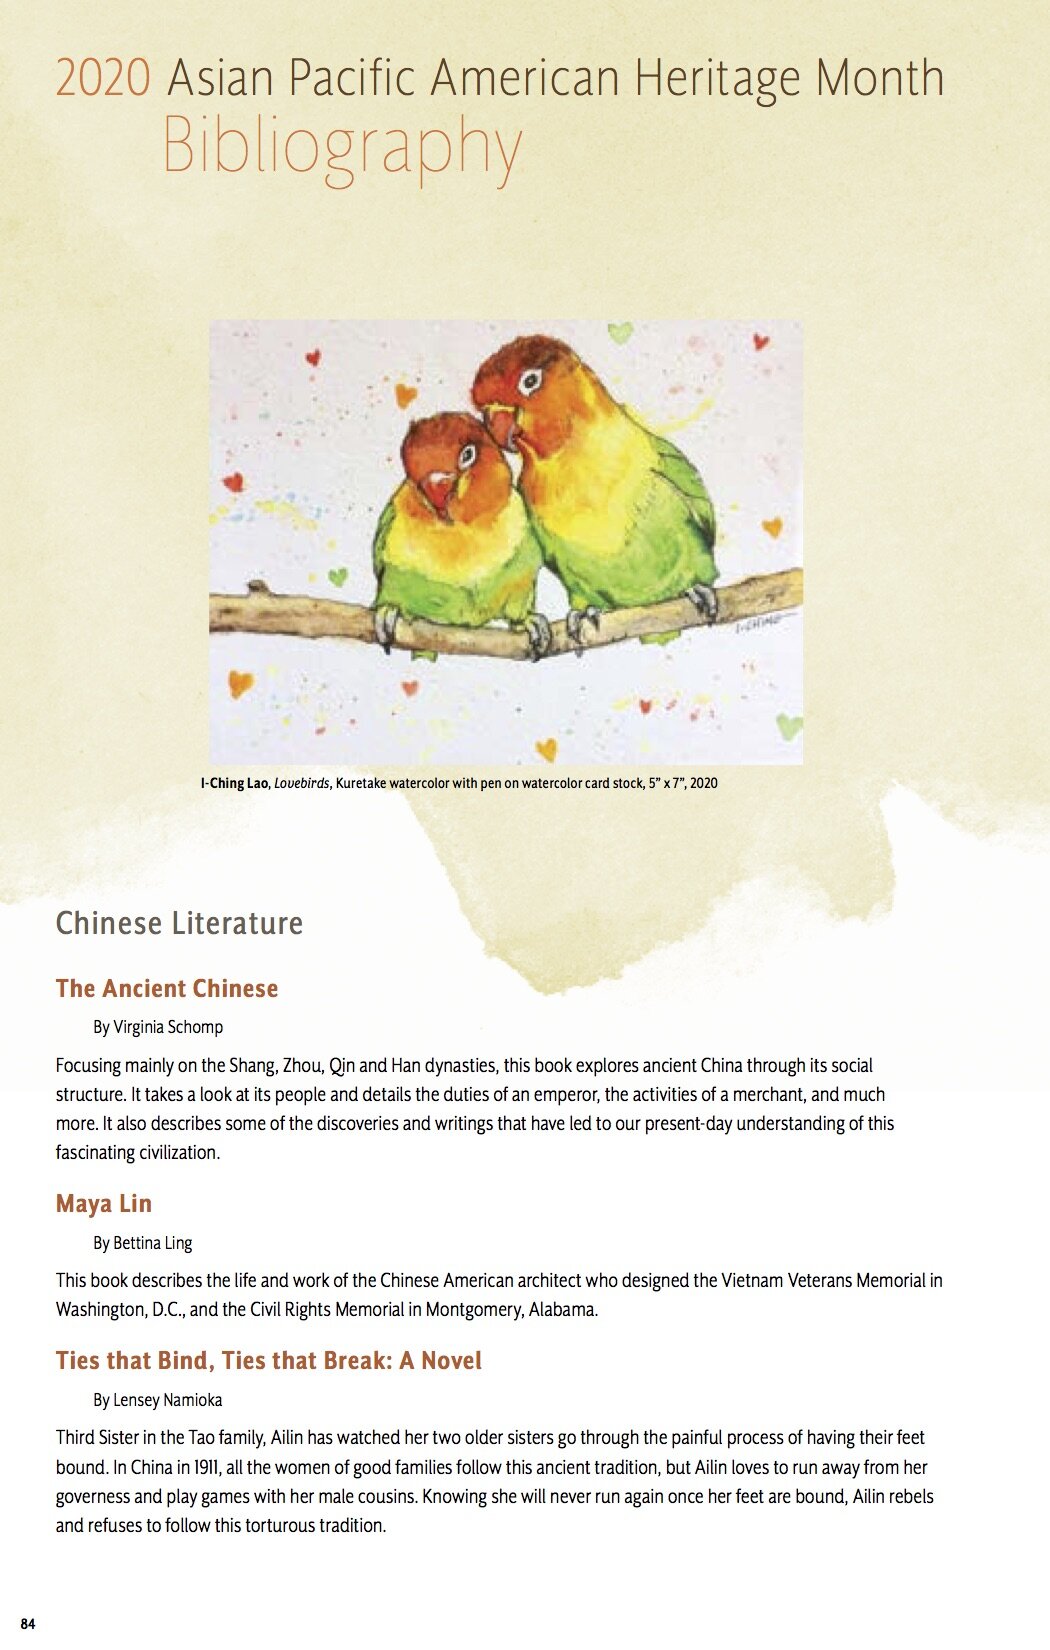 2020-APAHM-Guide-LOVEBIRDS.jpg